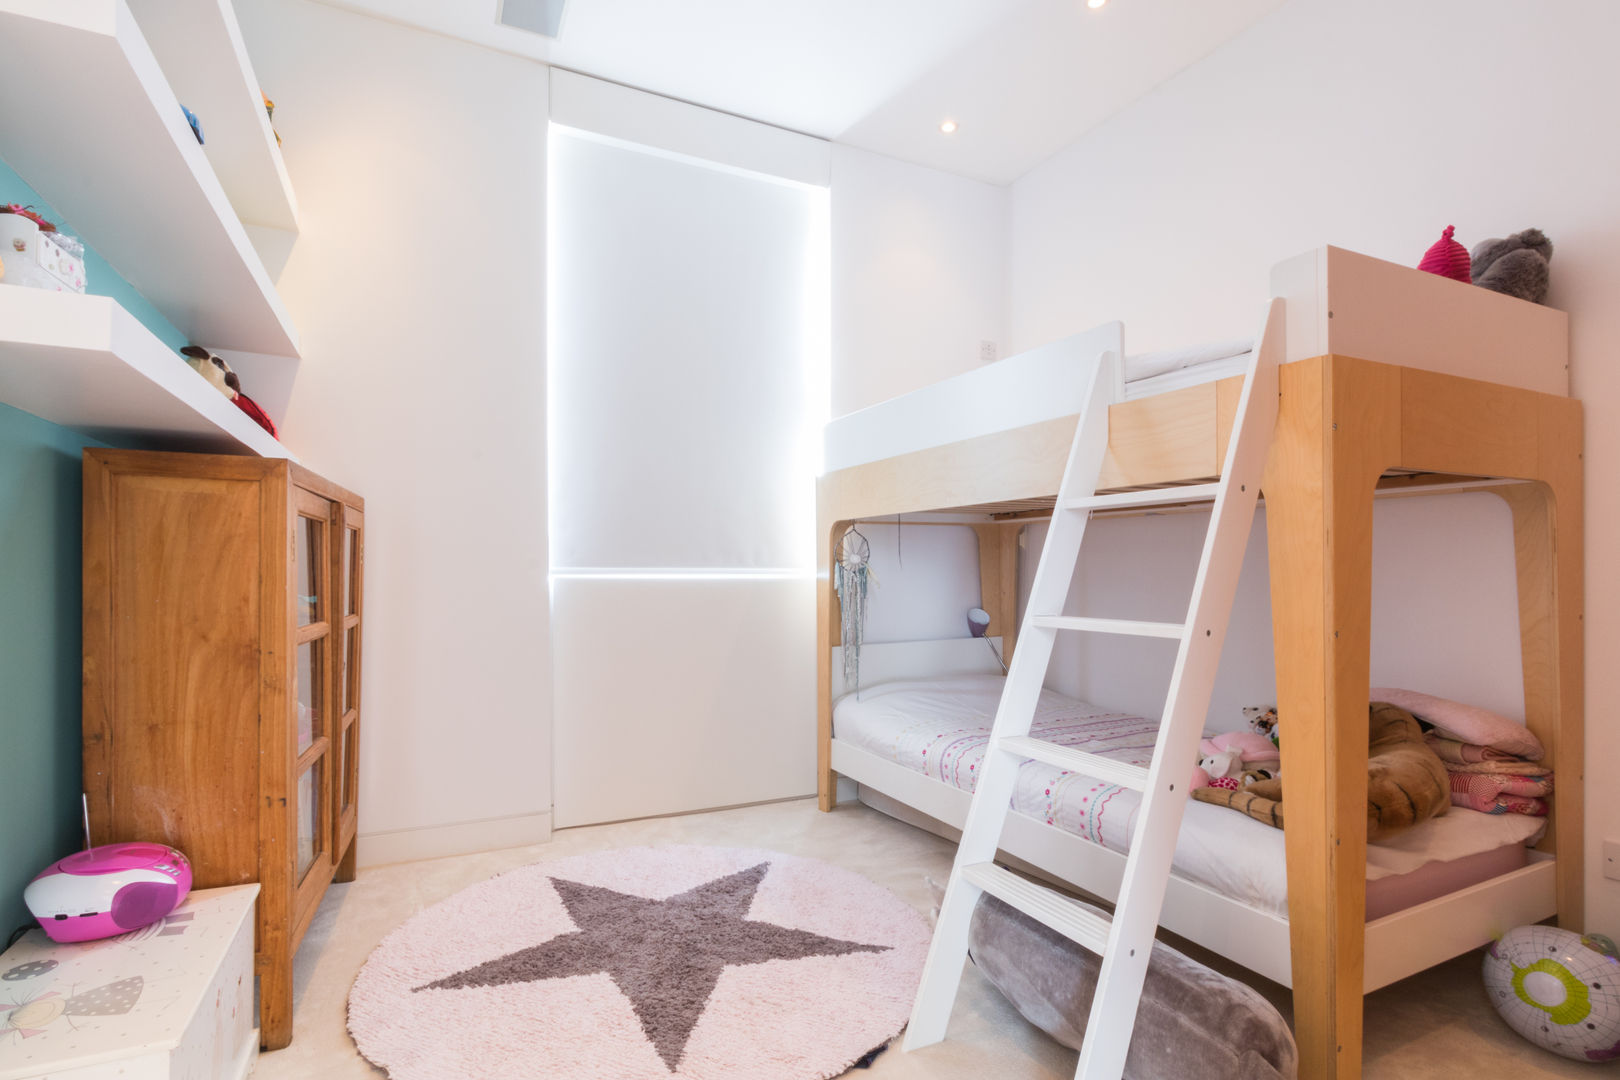 Kensington, SW5 - Renovation, TOTUS TOTUS Dormitorios infantiles de estilo moderno